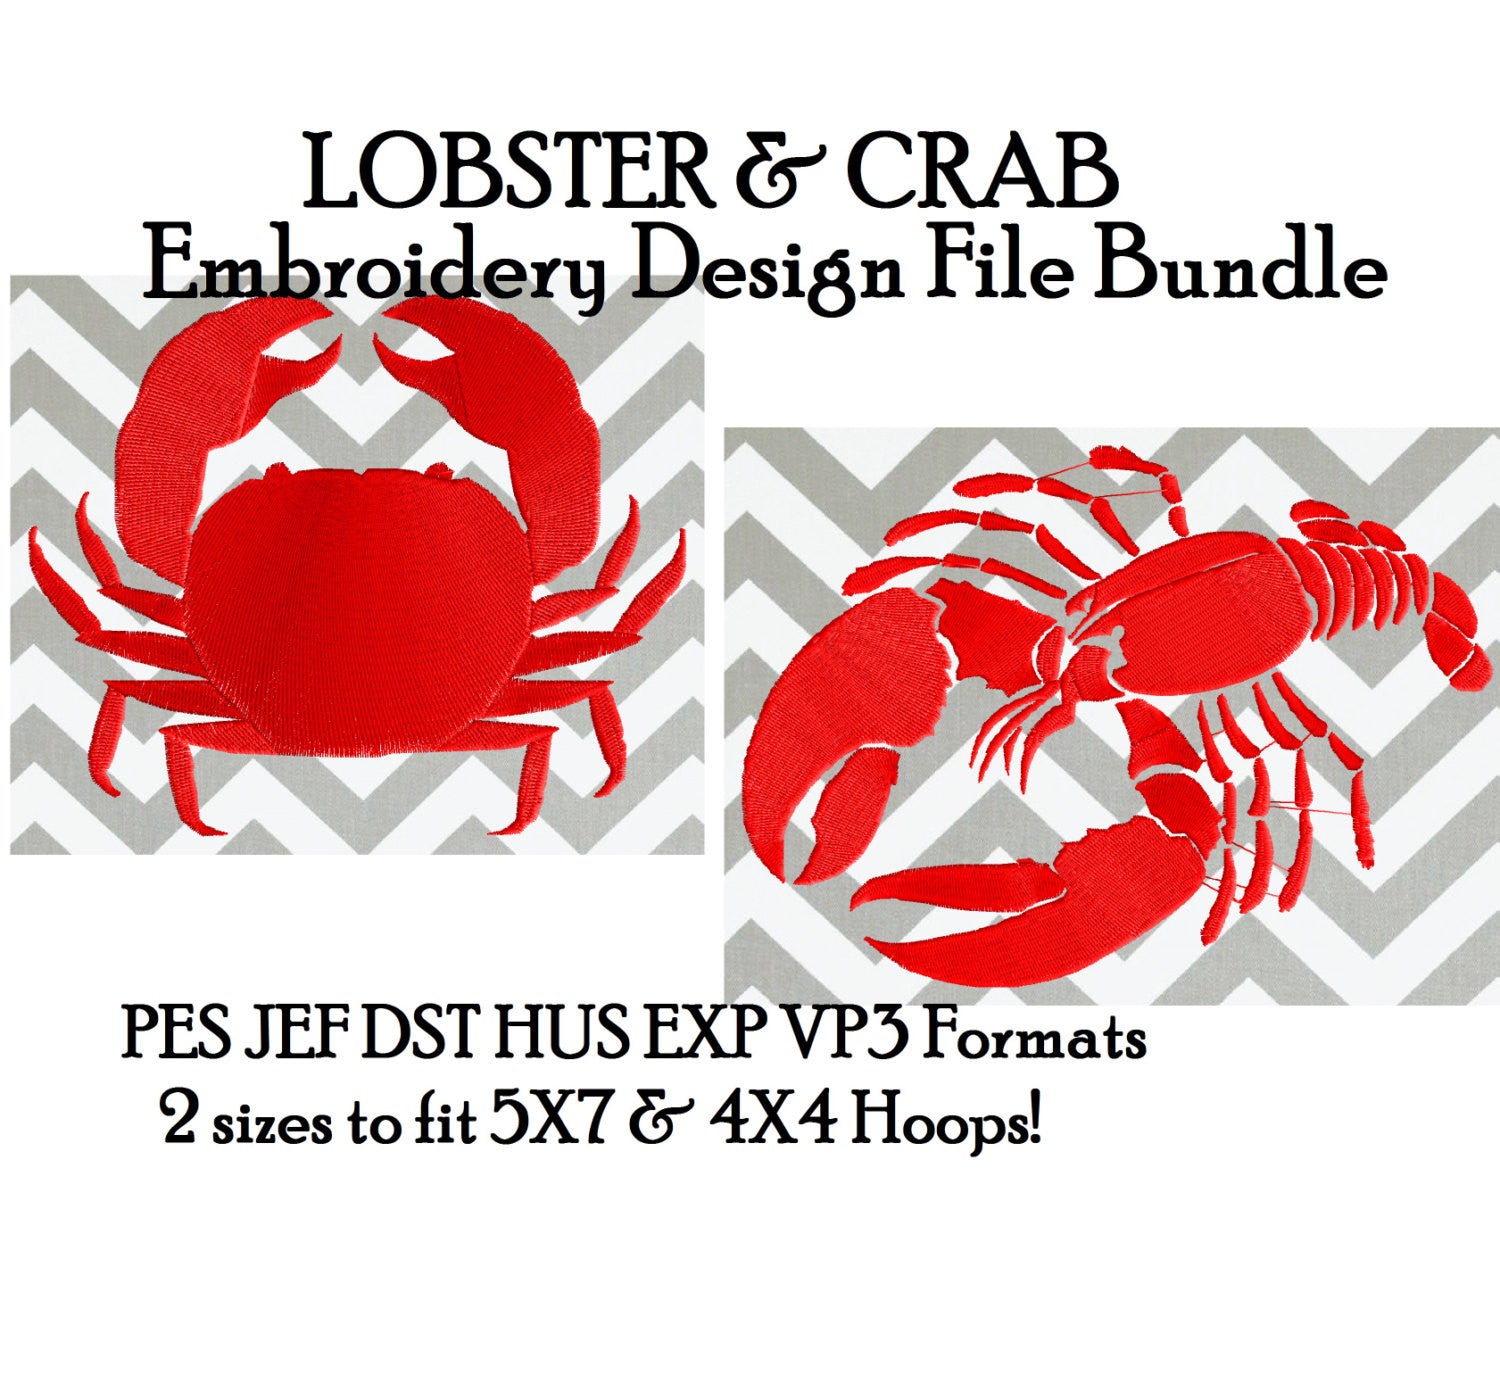 Lobster & Crab BUNDLE Silhouette - Embroidery Design Embroidery DESIGN FILE  - Instant download - Dst Hus Jef Pes Exp Vp3 formats